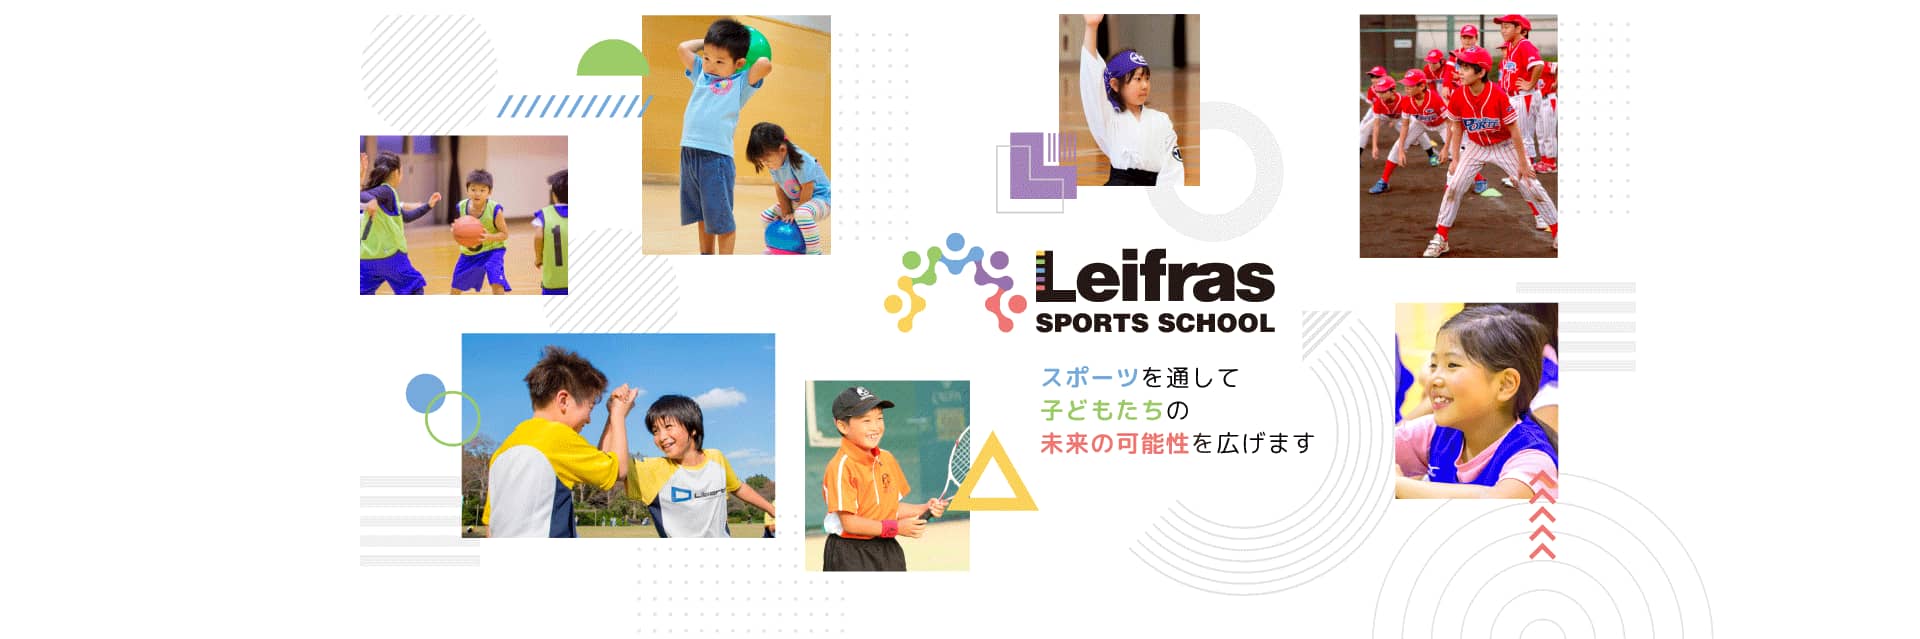 Leifras SPORTS SCHOOL